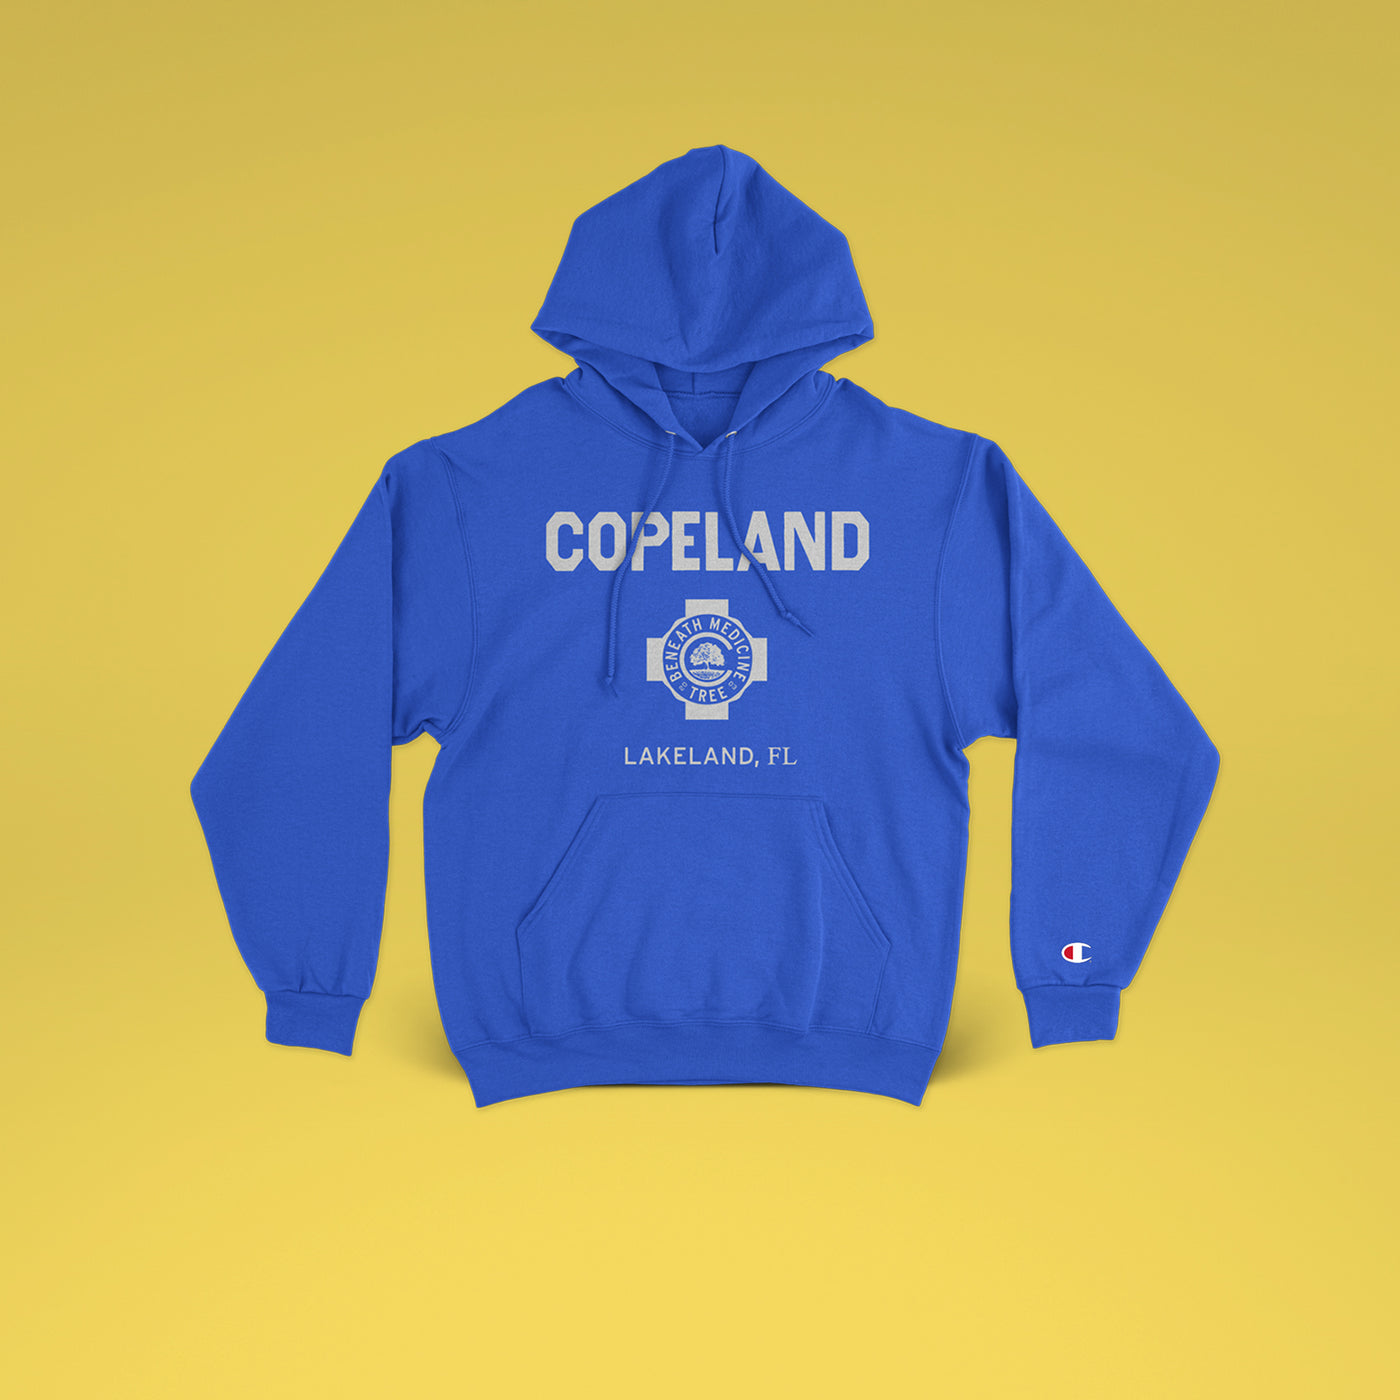 Copeland - Beneath Medicine Tree Hoodie